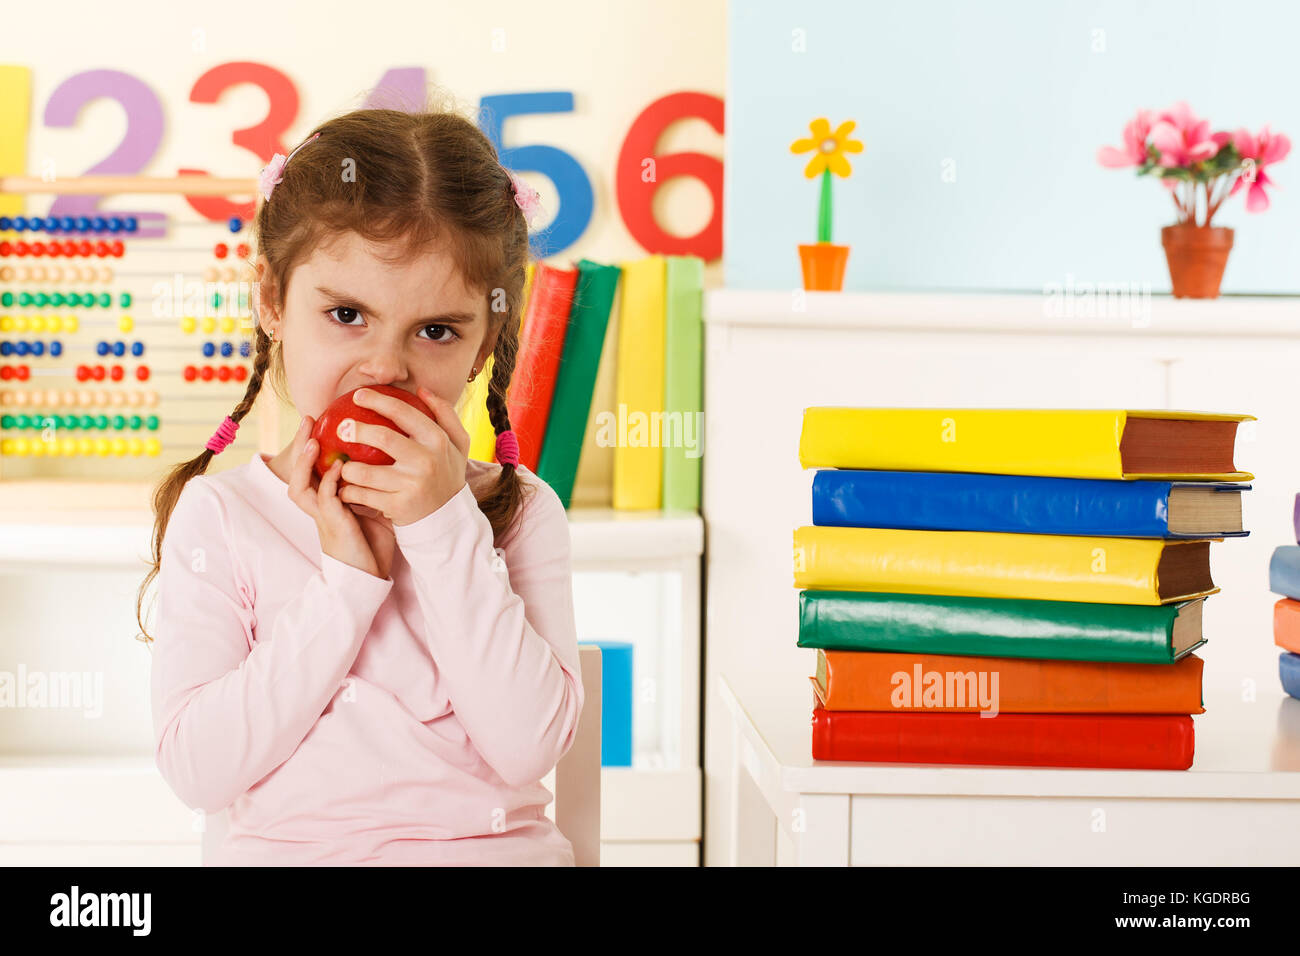 Preschool girl eating red apple Stock Photo